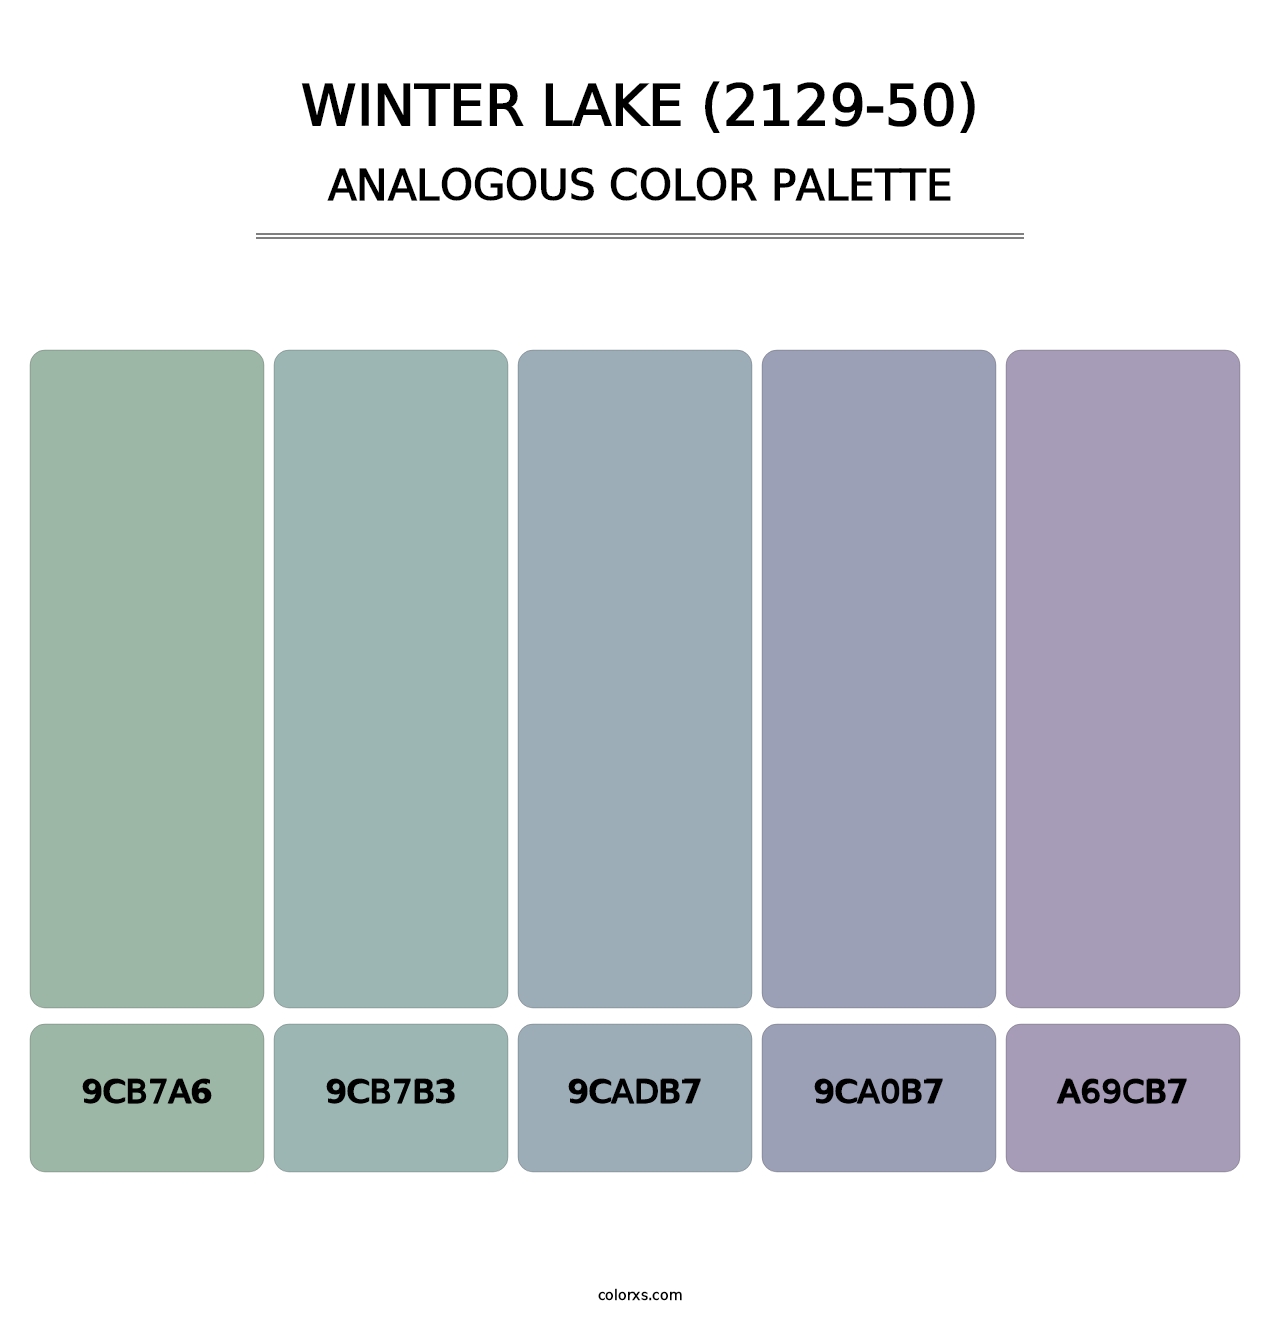 Winter Lake (2129-50) - Analogous Color Palette